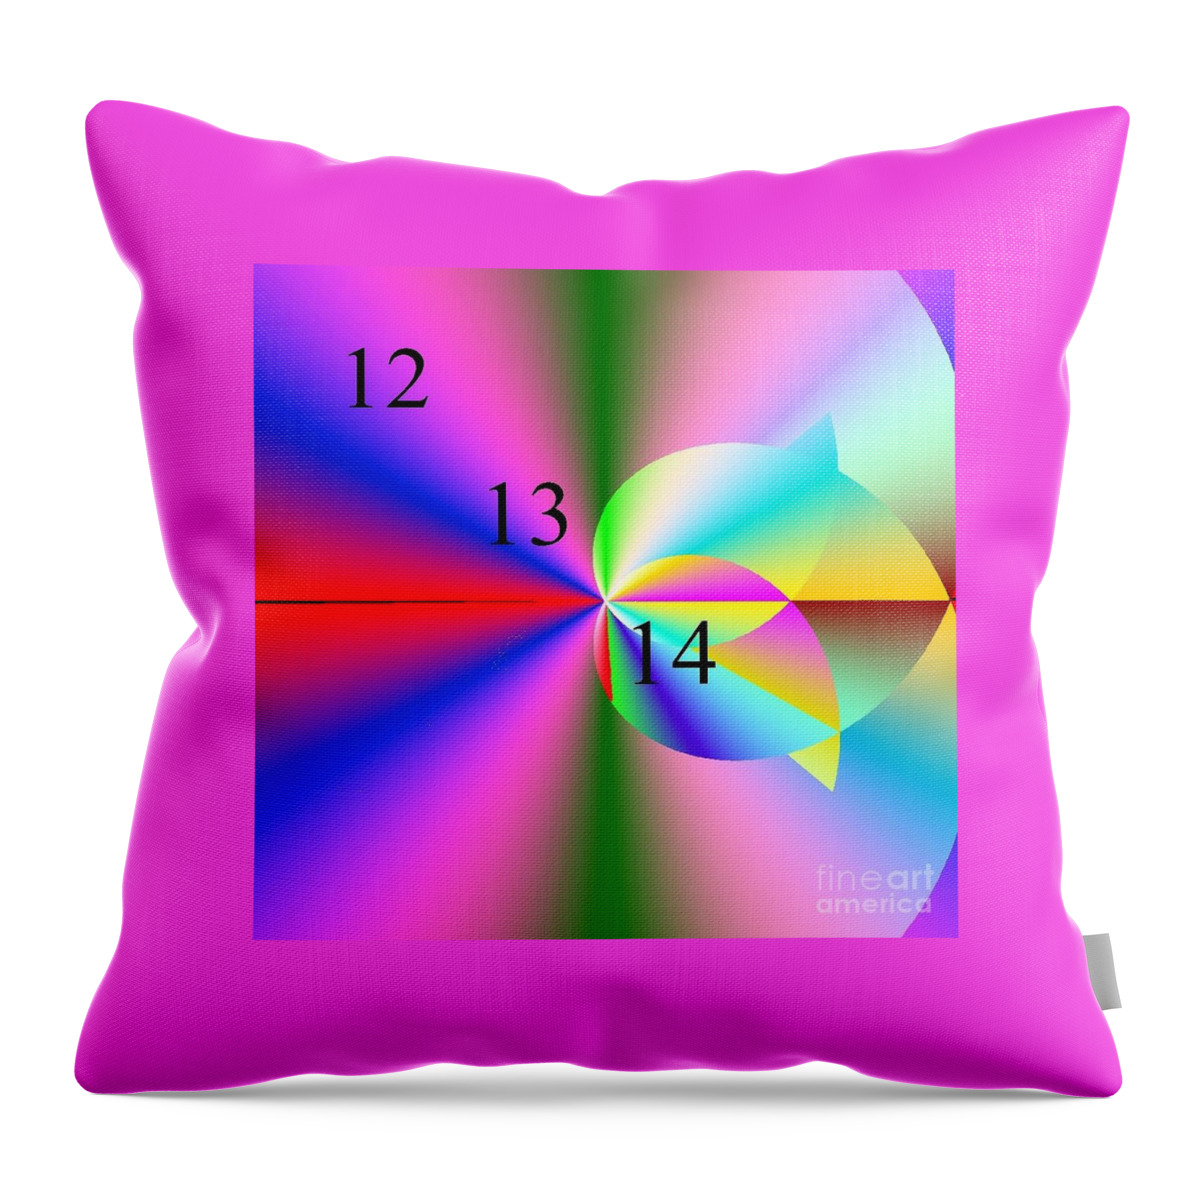 12/13/14 Rainbow Tulip Throw Pillow featuring the digital art 12/13/14 Rainbow Tulip by Michael Skinner